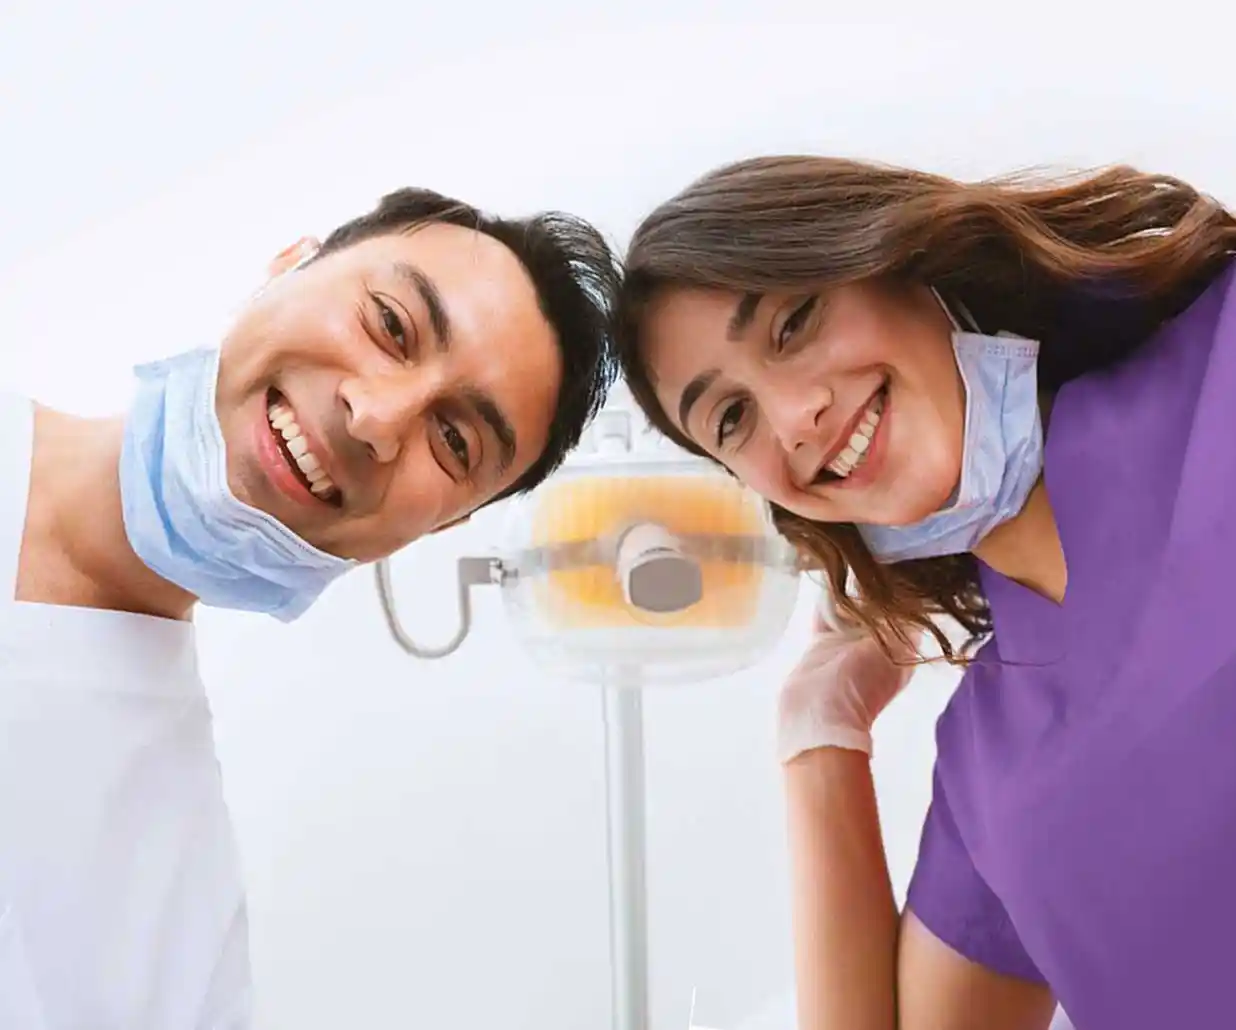 Two smiling dental employees